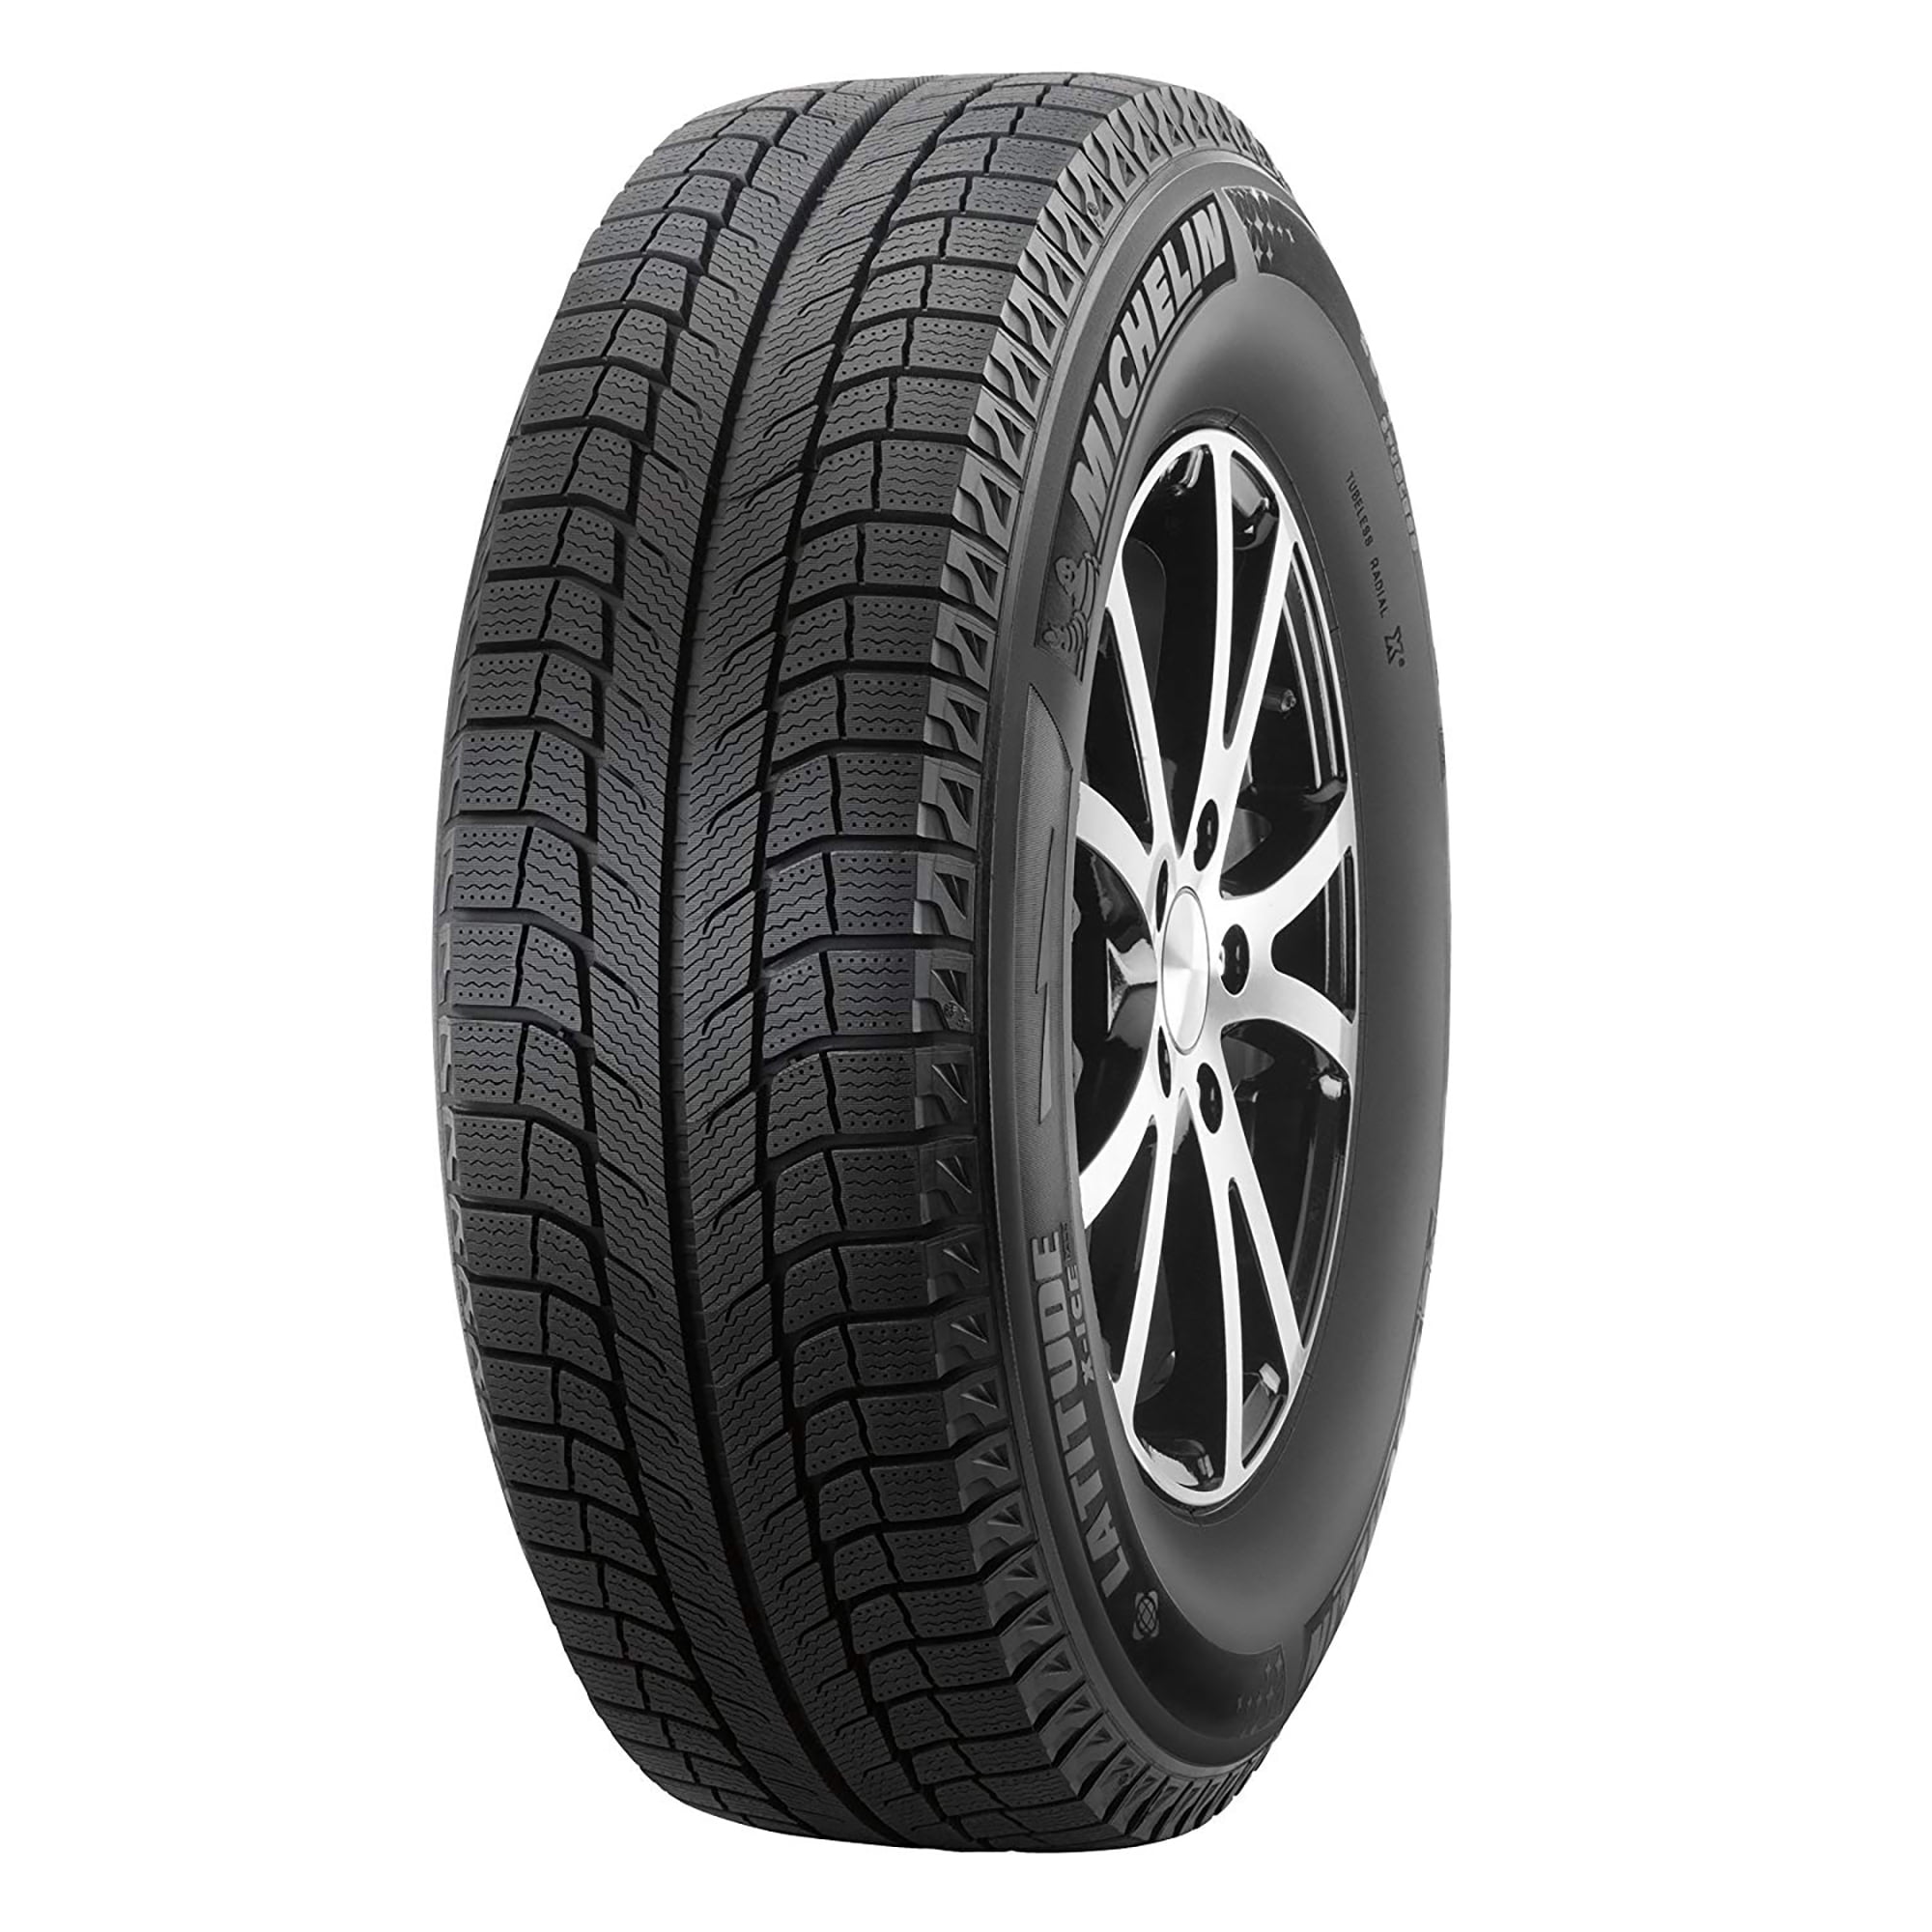 Michelin Latitude X-Ice XI2 Winter Radial Tire - 235/65R17/XL 108T